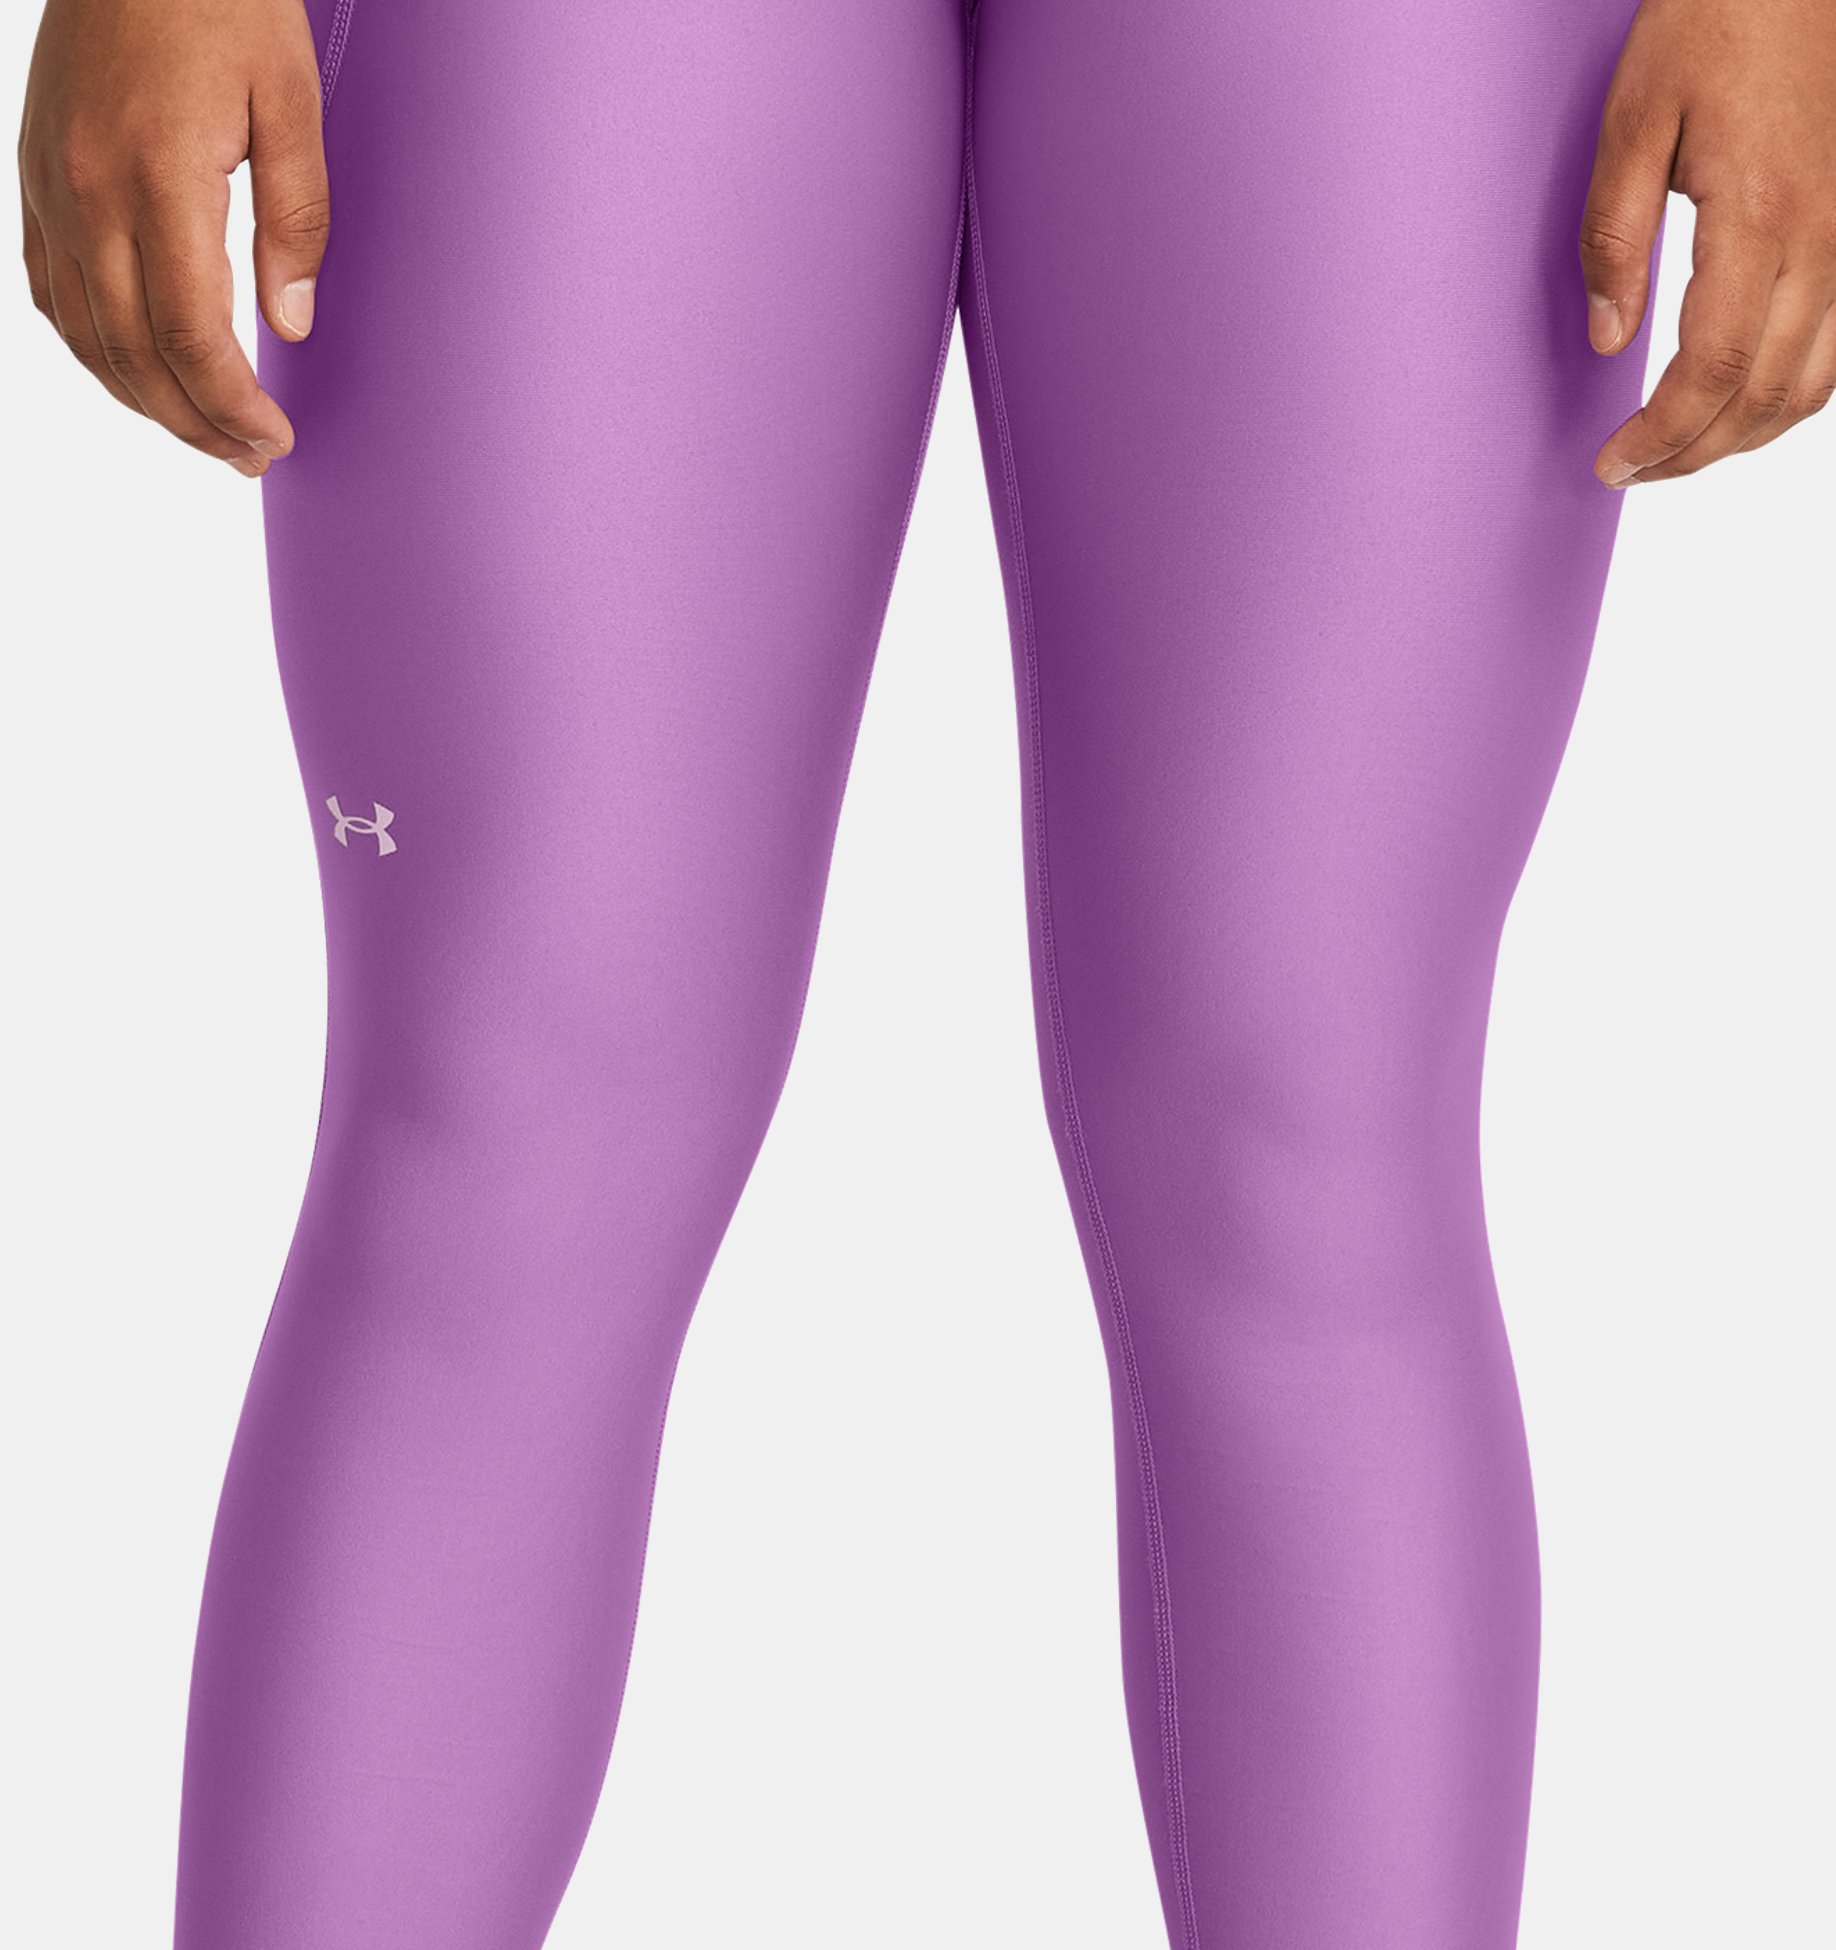 Nwt Girls Under Armour Purple Pink Logo Printed HeatGear Leggings Sz XL